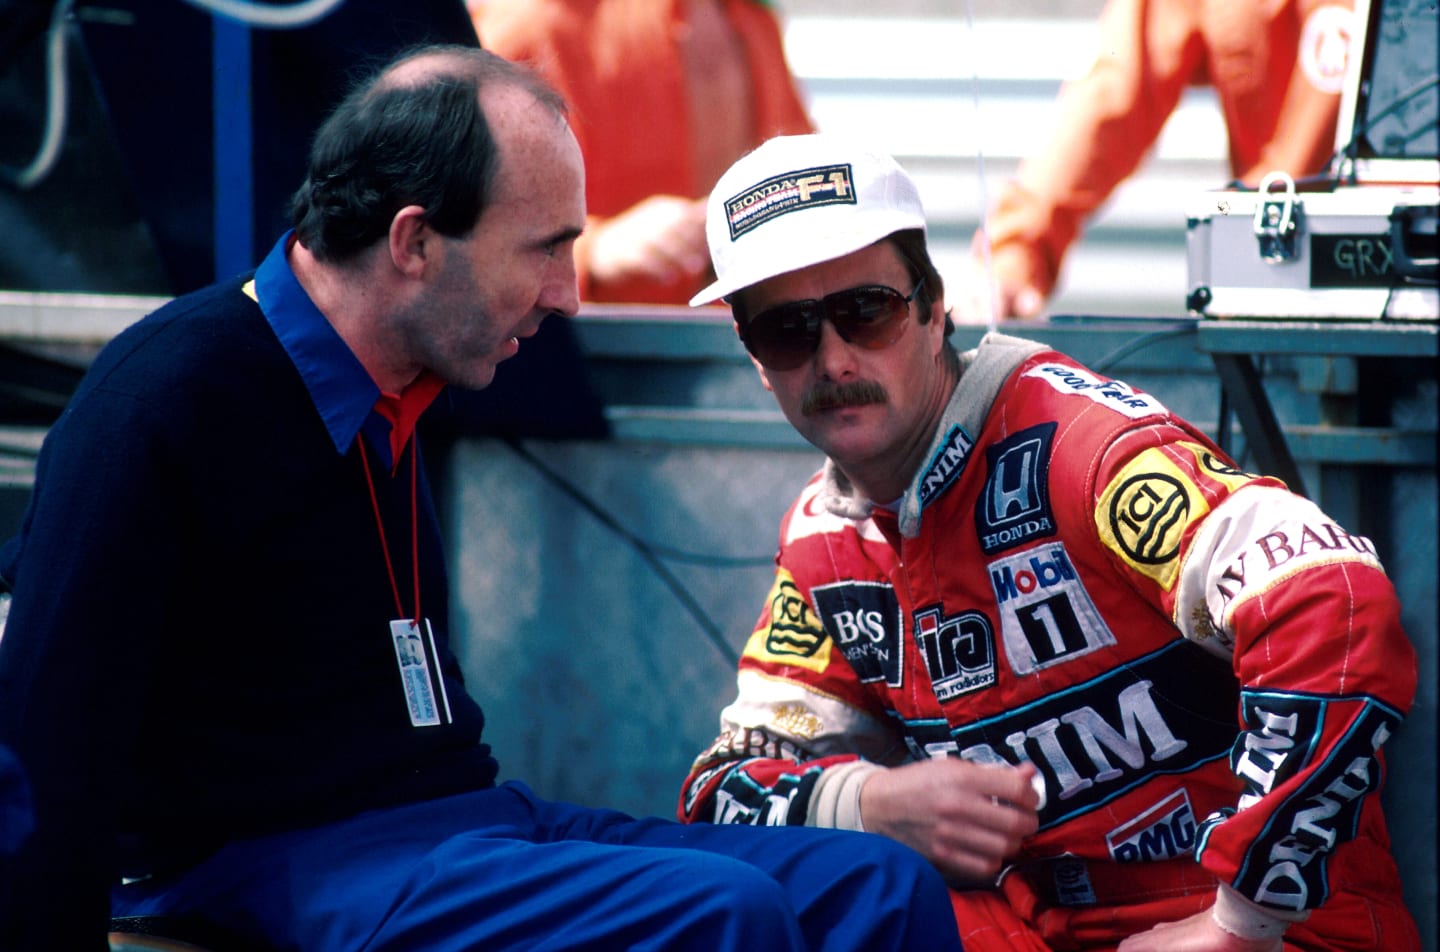 Frank Williams and Nigel Mansell (GBR) Williams FW11B
Monaco Grand Prix, Monte Carlo, 31 May